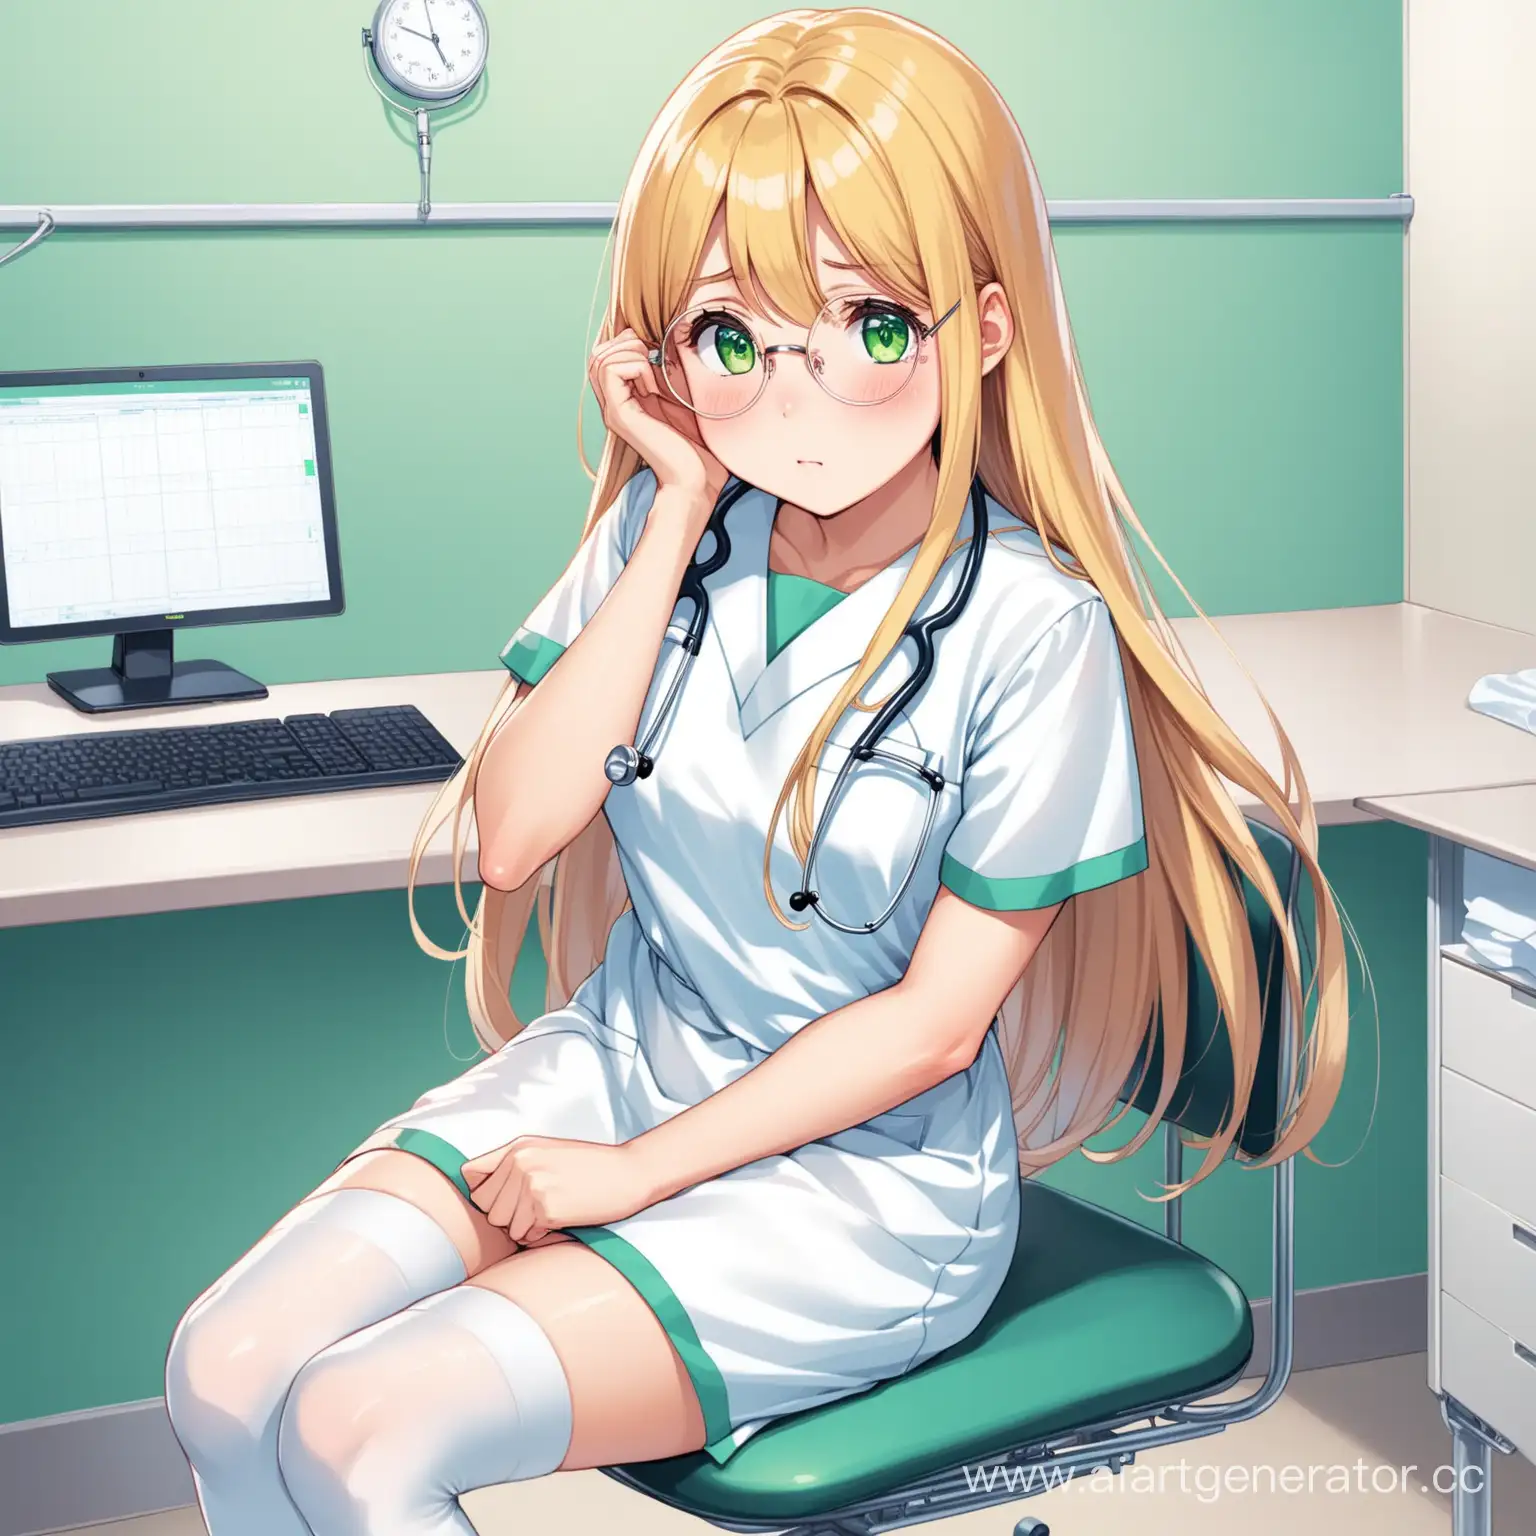 Cute-Blonde-Girl-in-Medical-Dress-at-Hospital-Desk